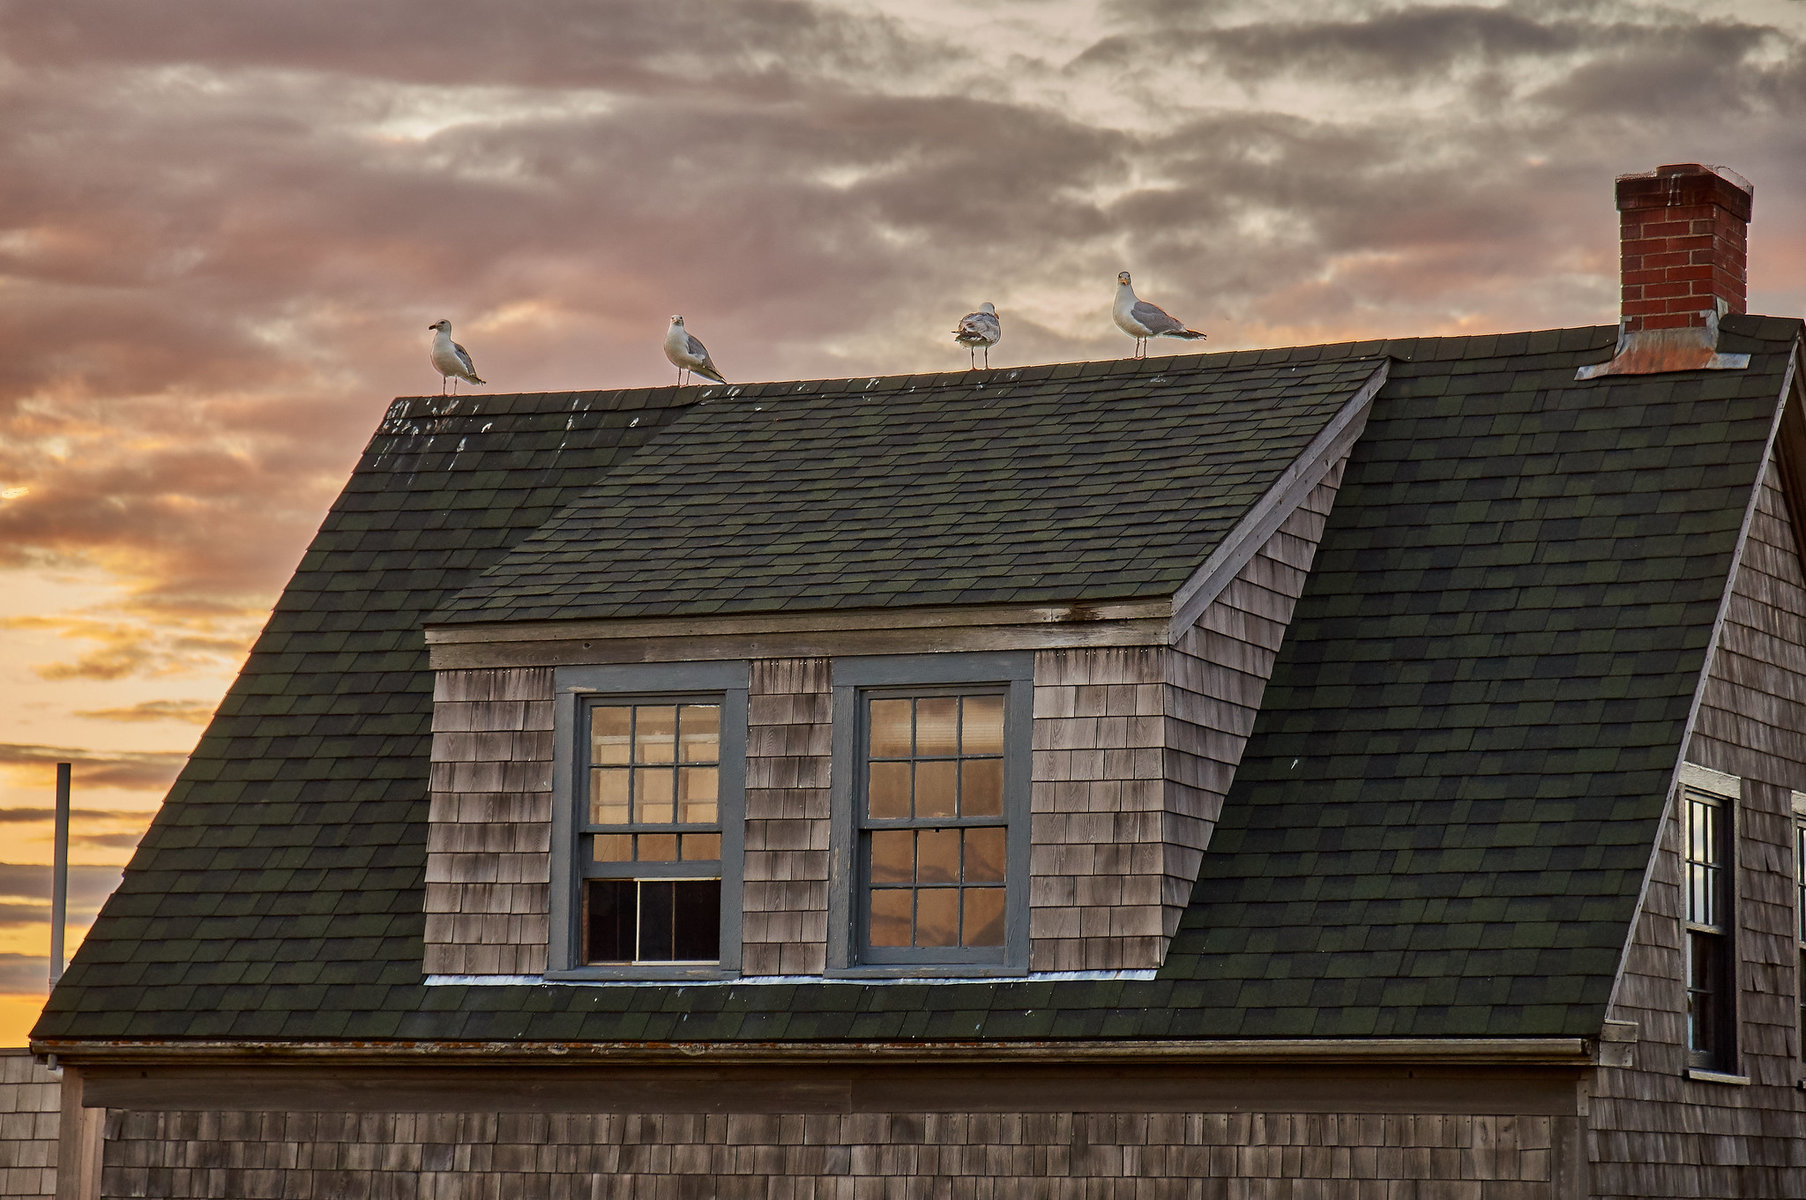 Seagulls sit atop a home at sunset.